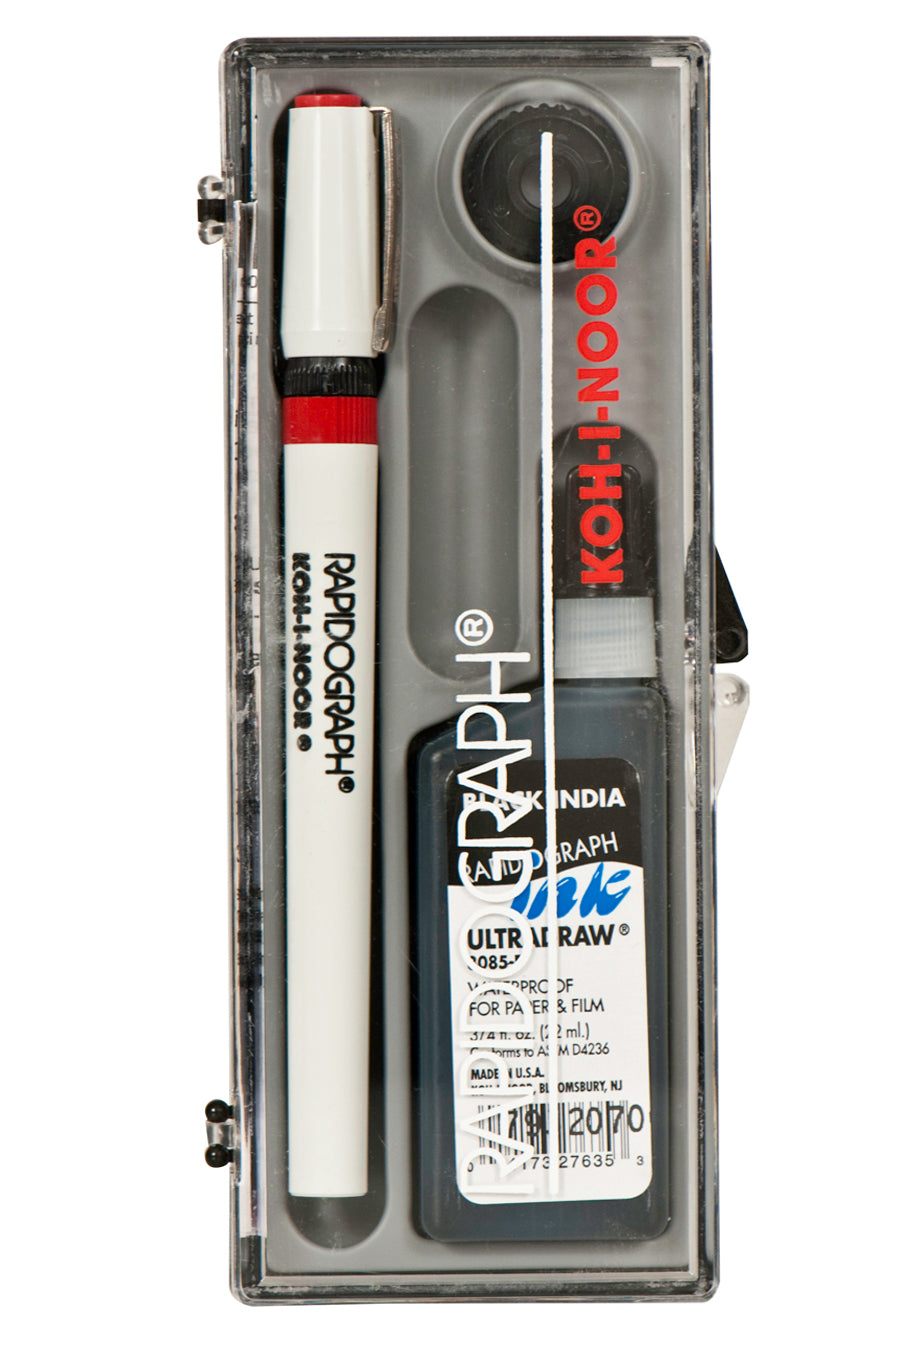 koh-i-noor rapidograph pens 3165-SP7 Set Of 7 Technical Pens